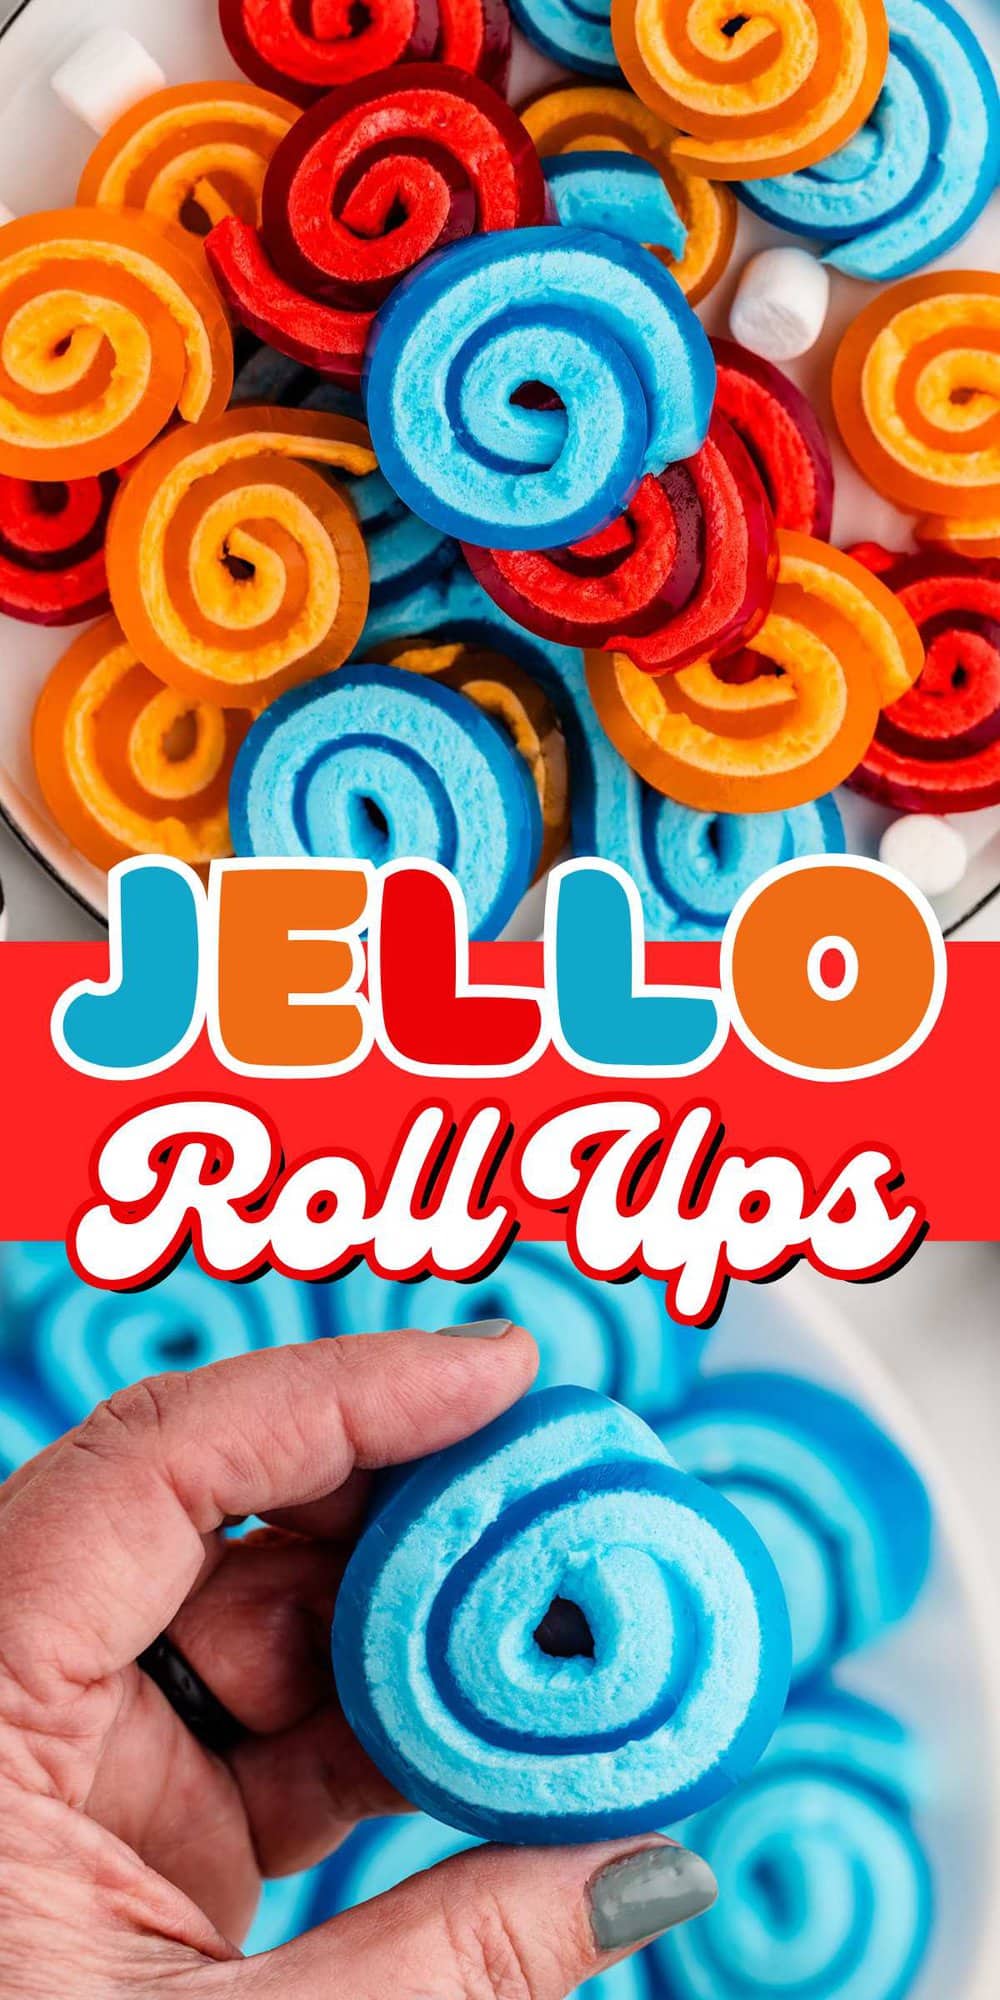 Jello Roll Ups pinterest image